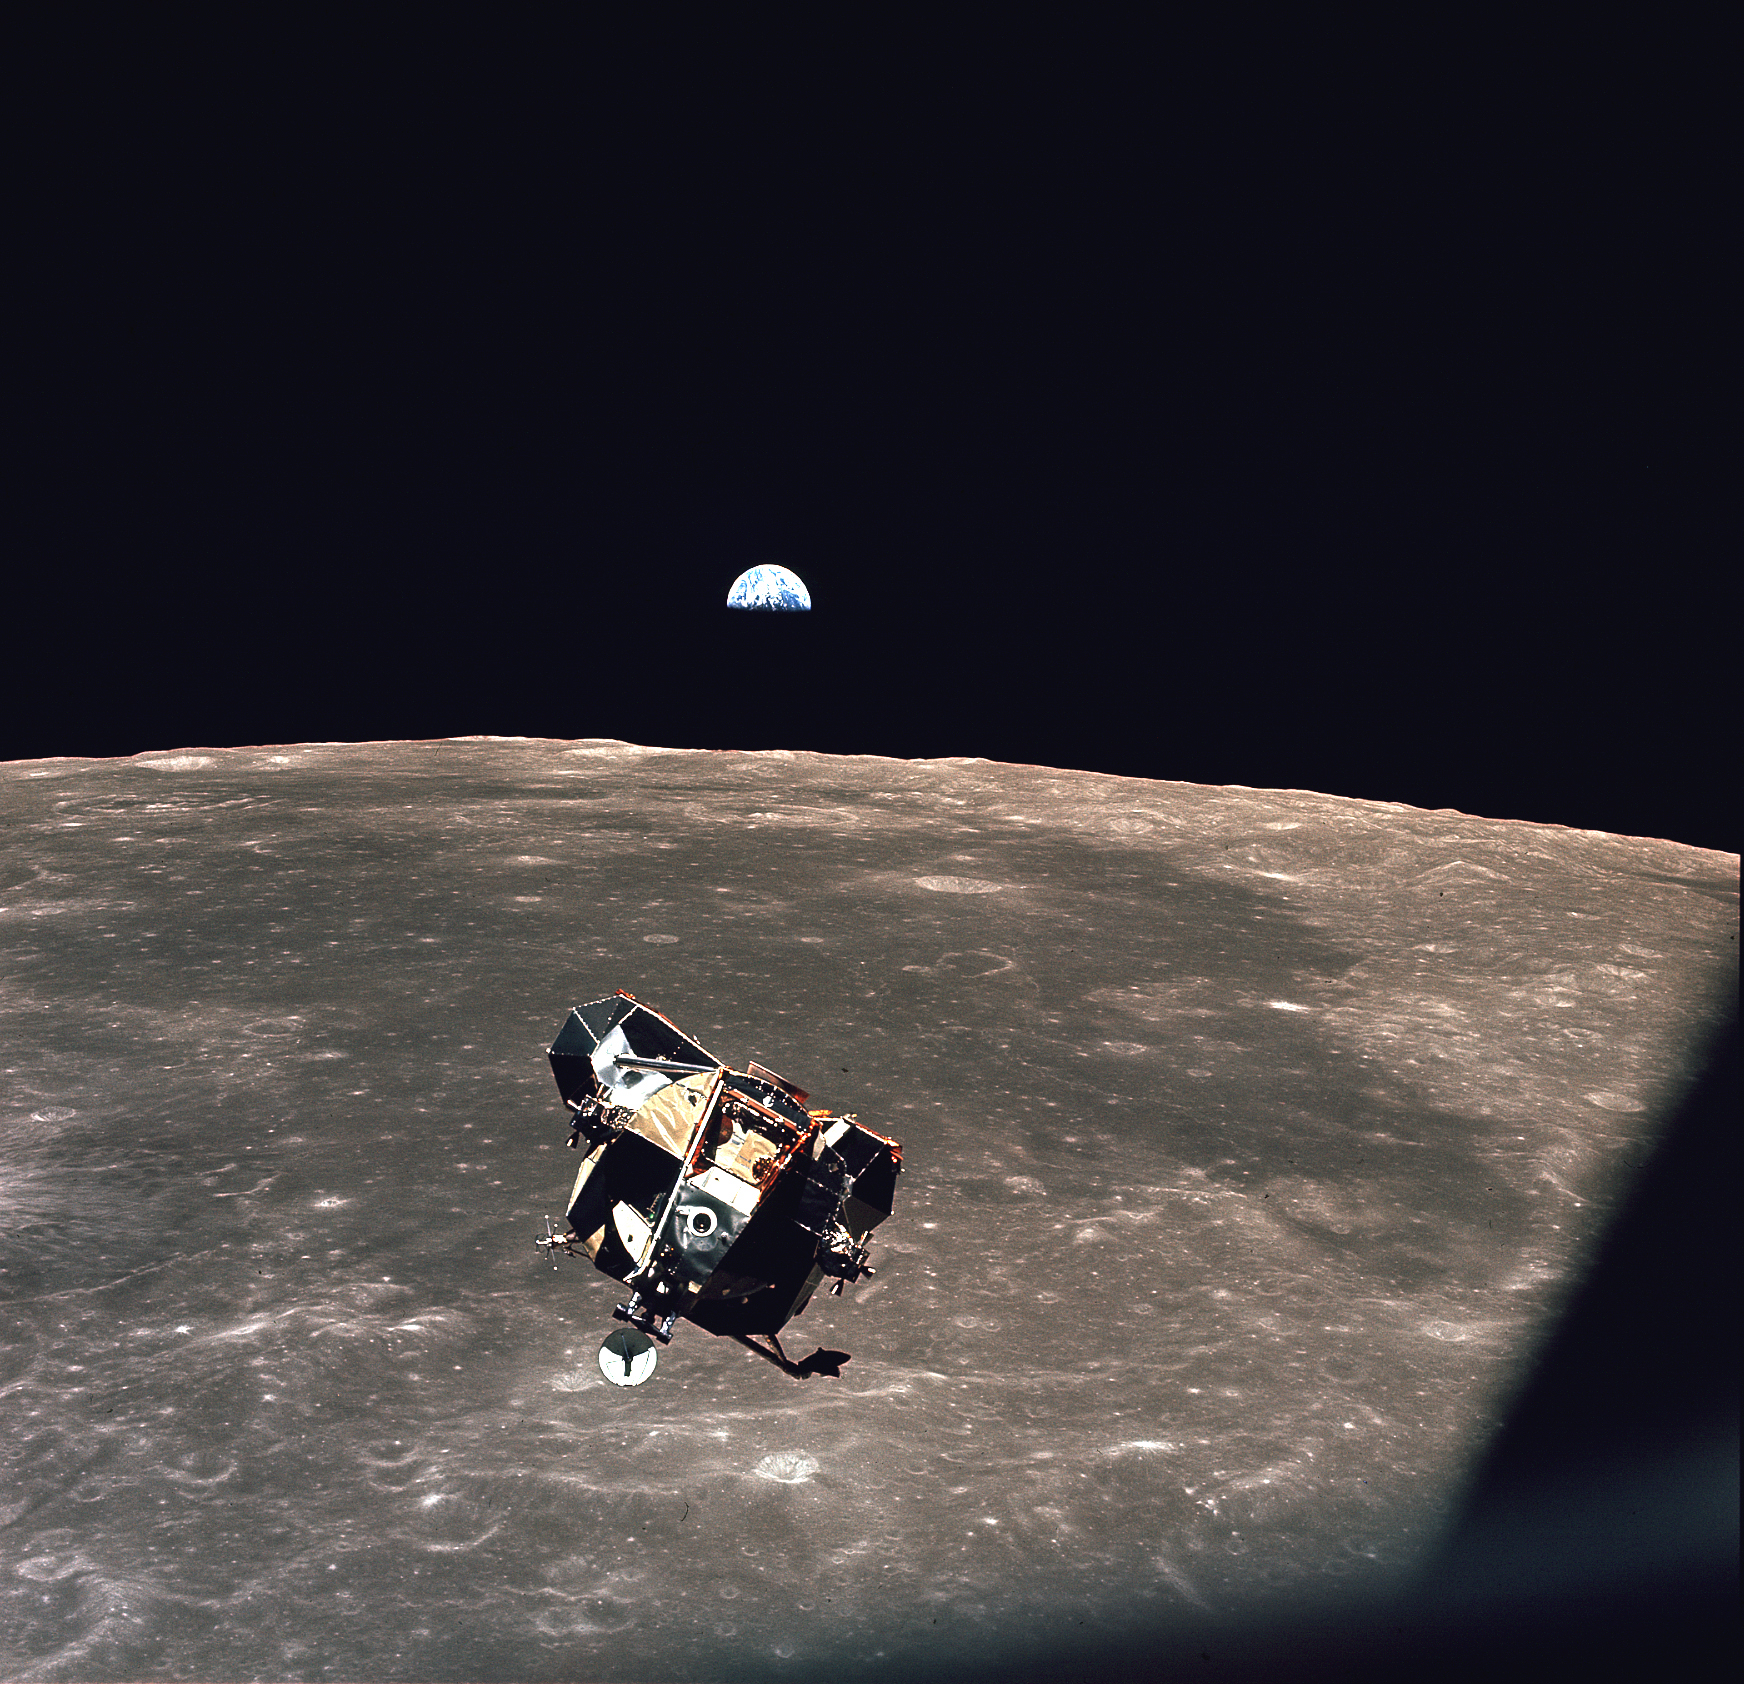 The Apollo 11 lunar module, the Moon, and the Earth